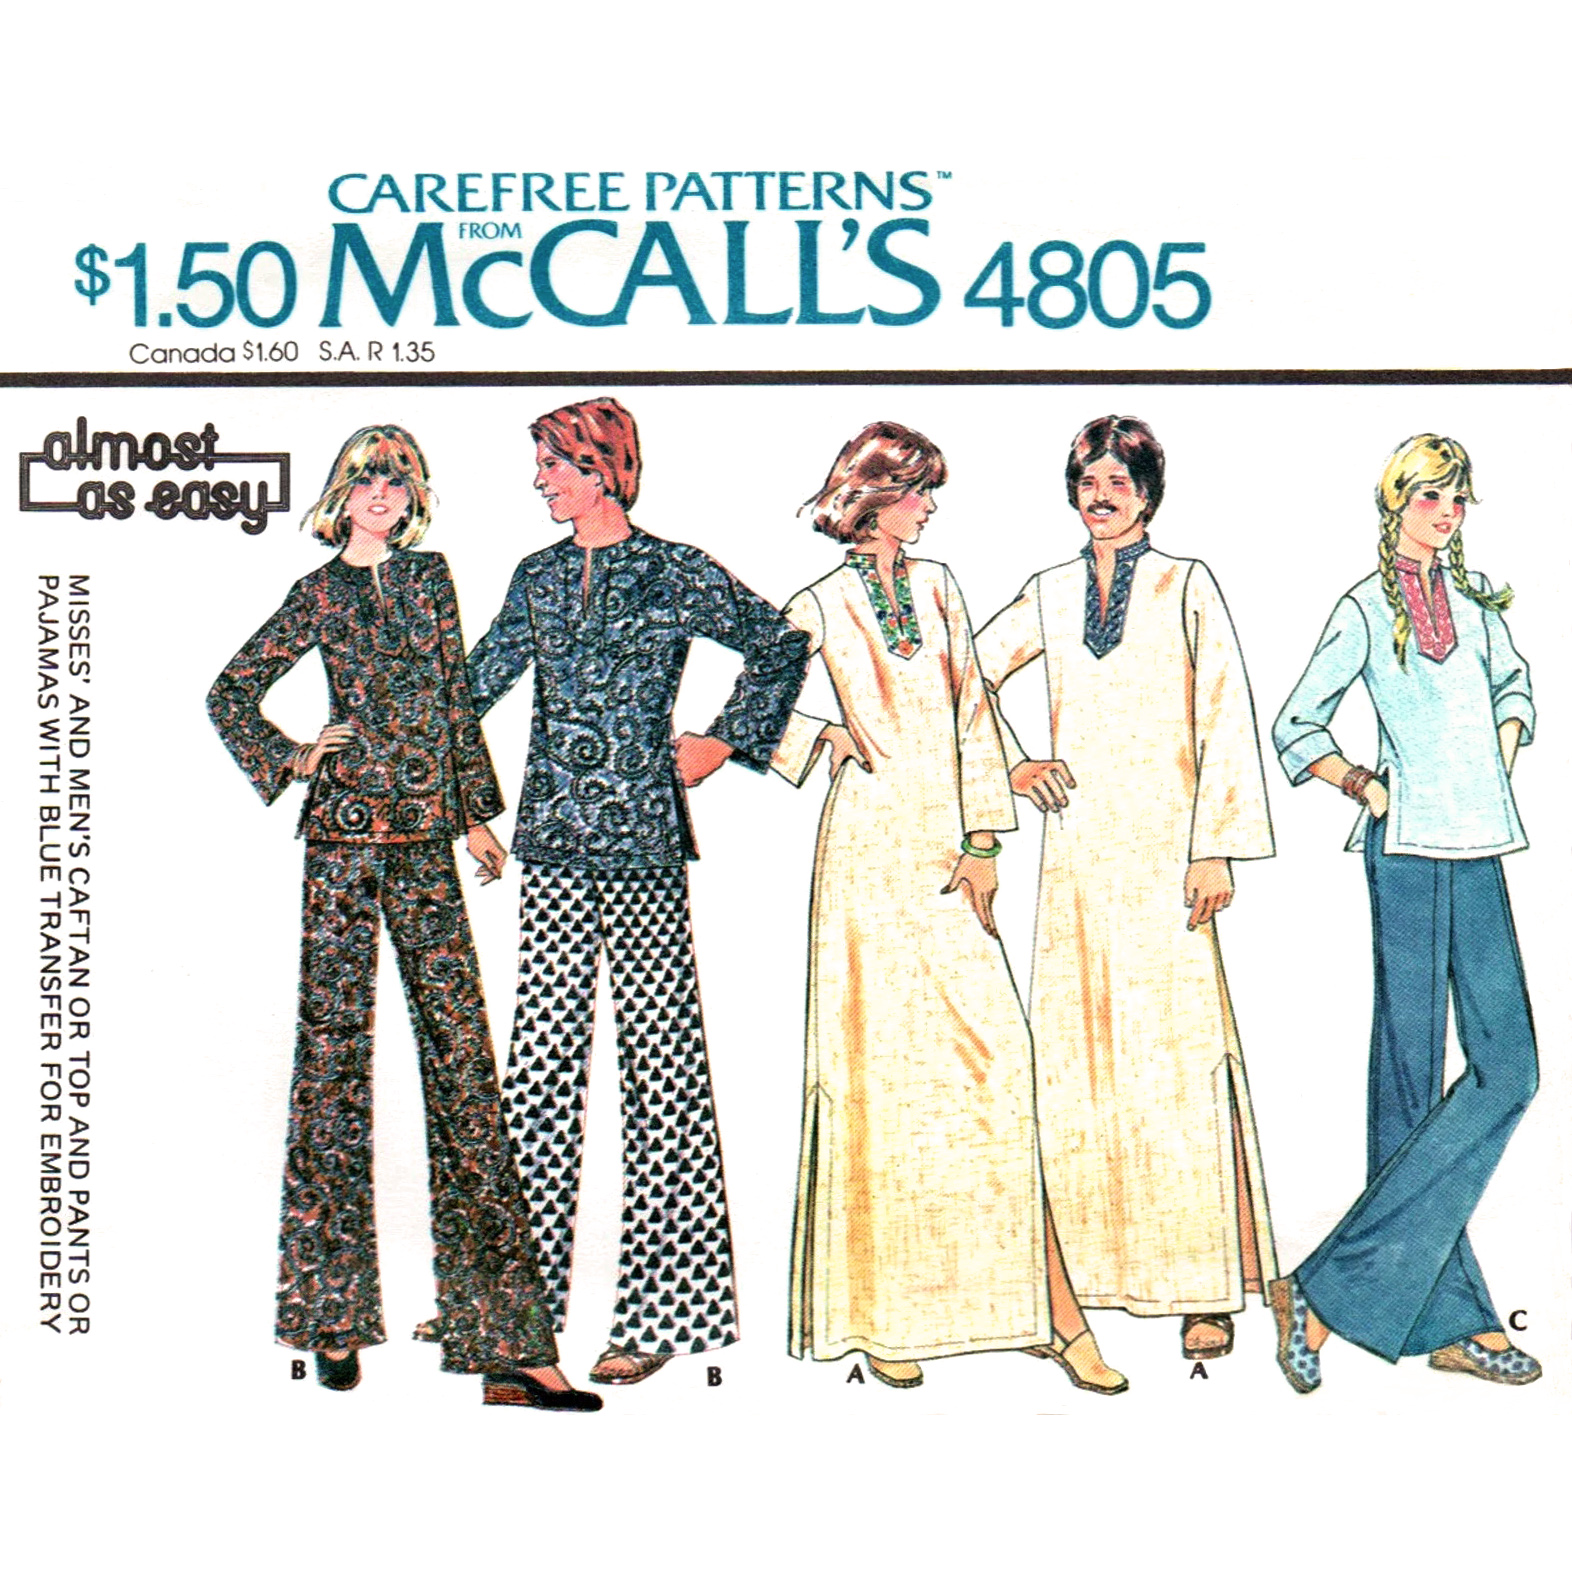 McCalls 4805 pattern